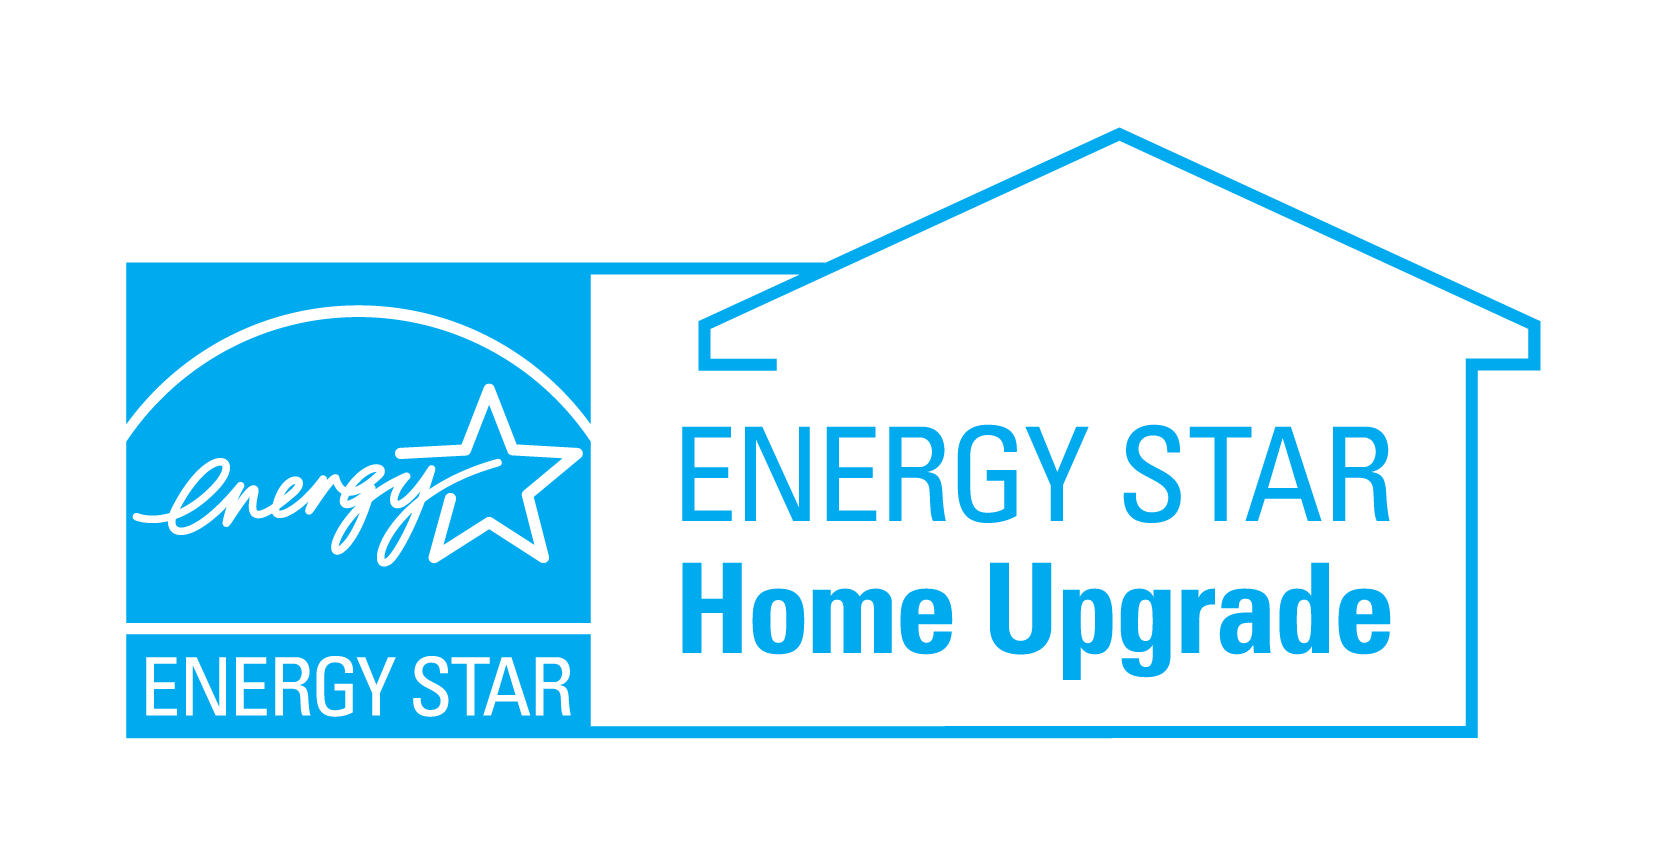 ENERGY STAR Home Upgrade